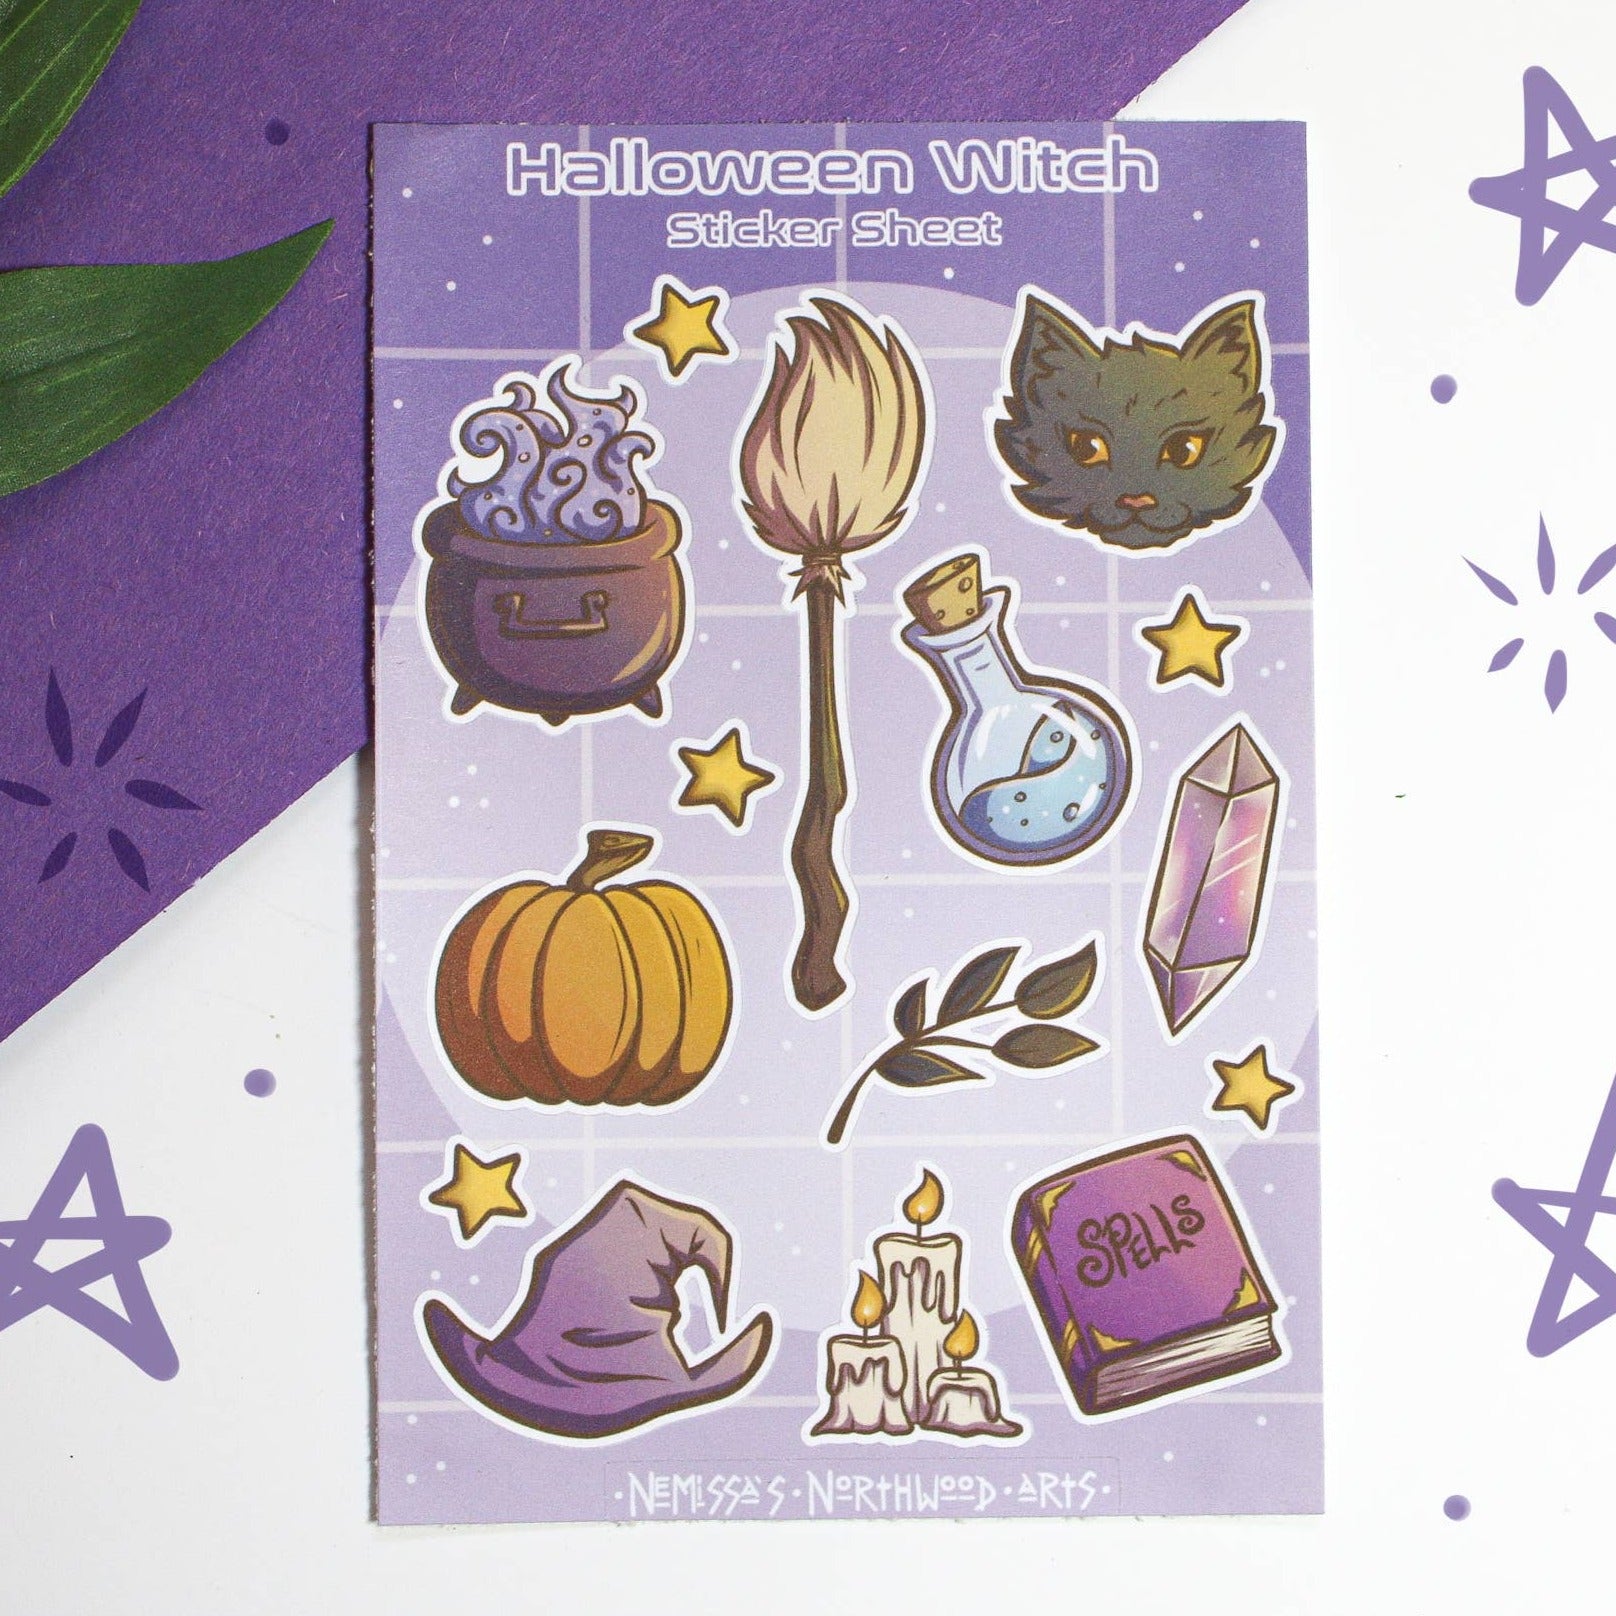 Witchy Halloween Sticker Sheet